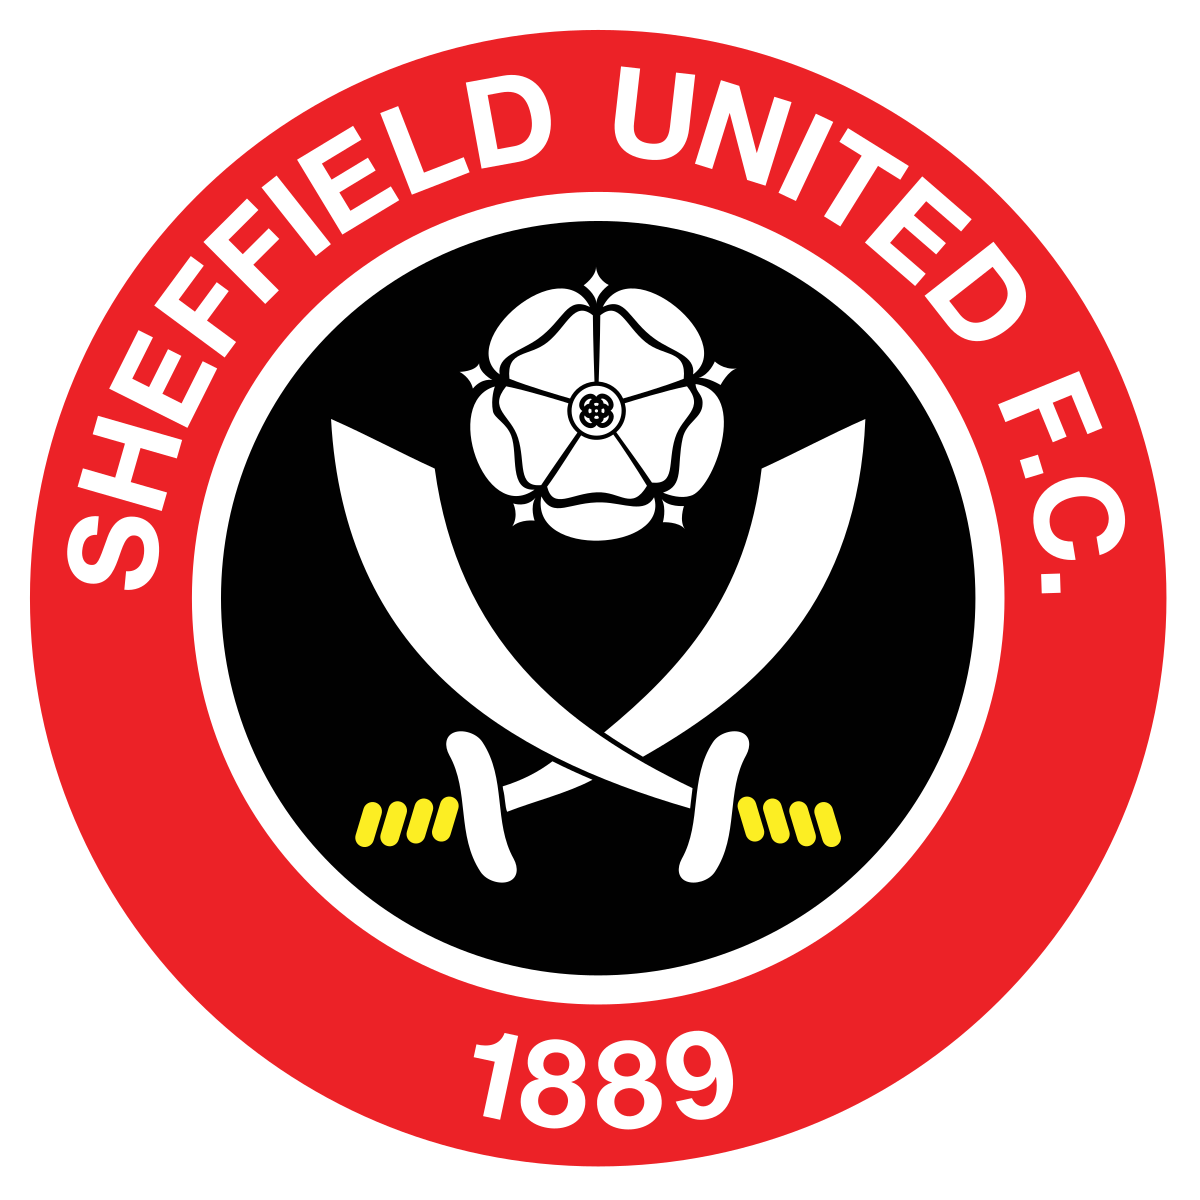 Sheffield United Hospitality